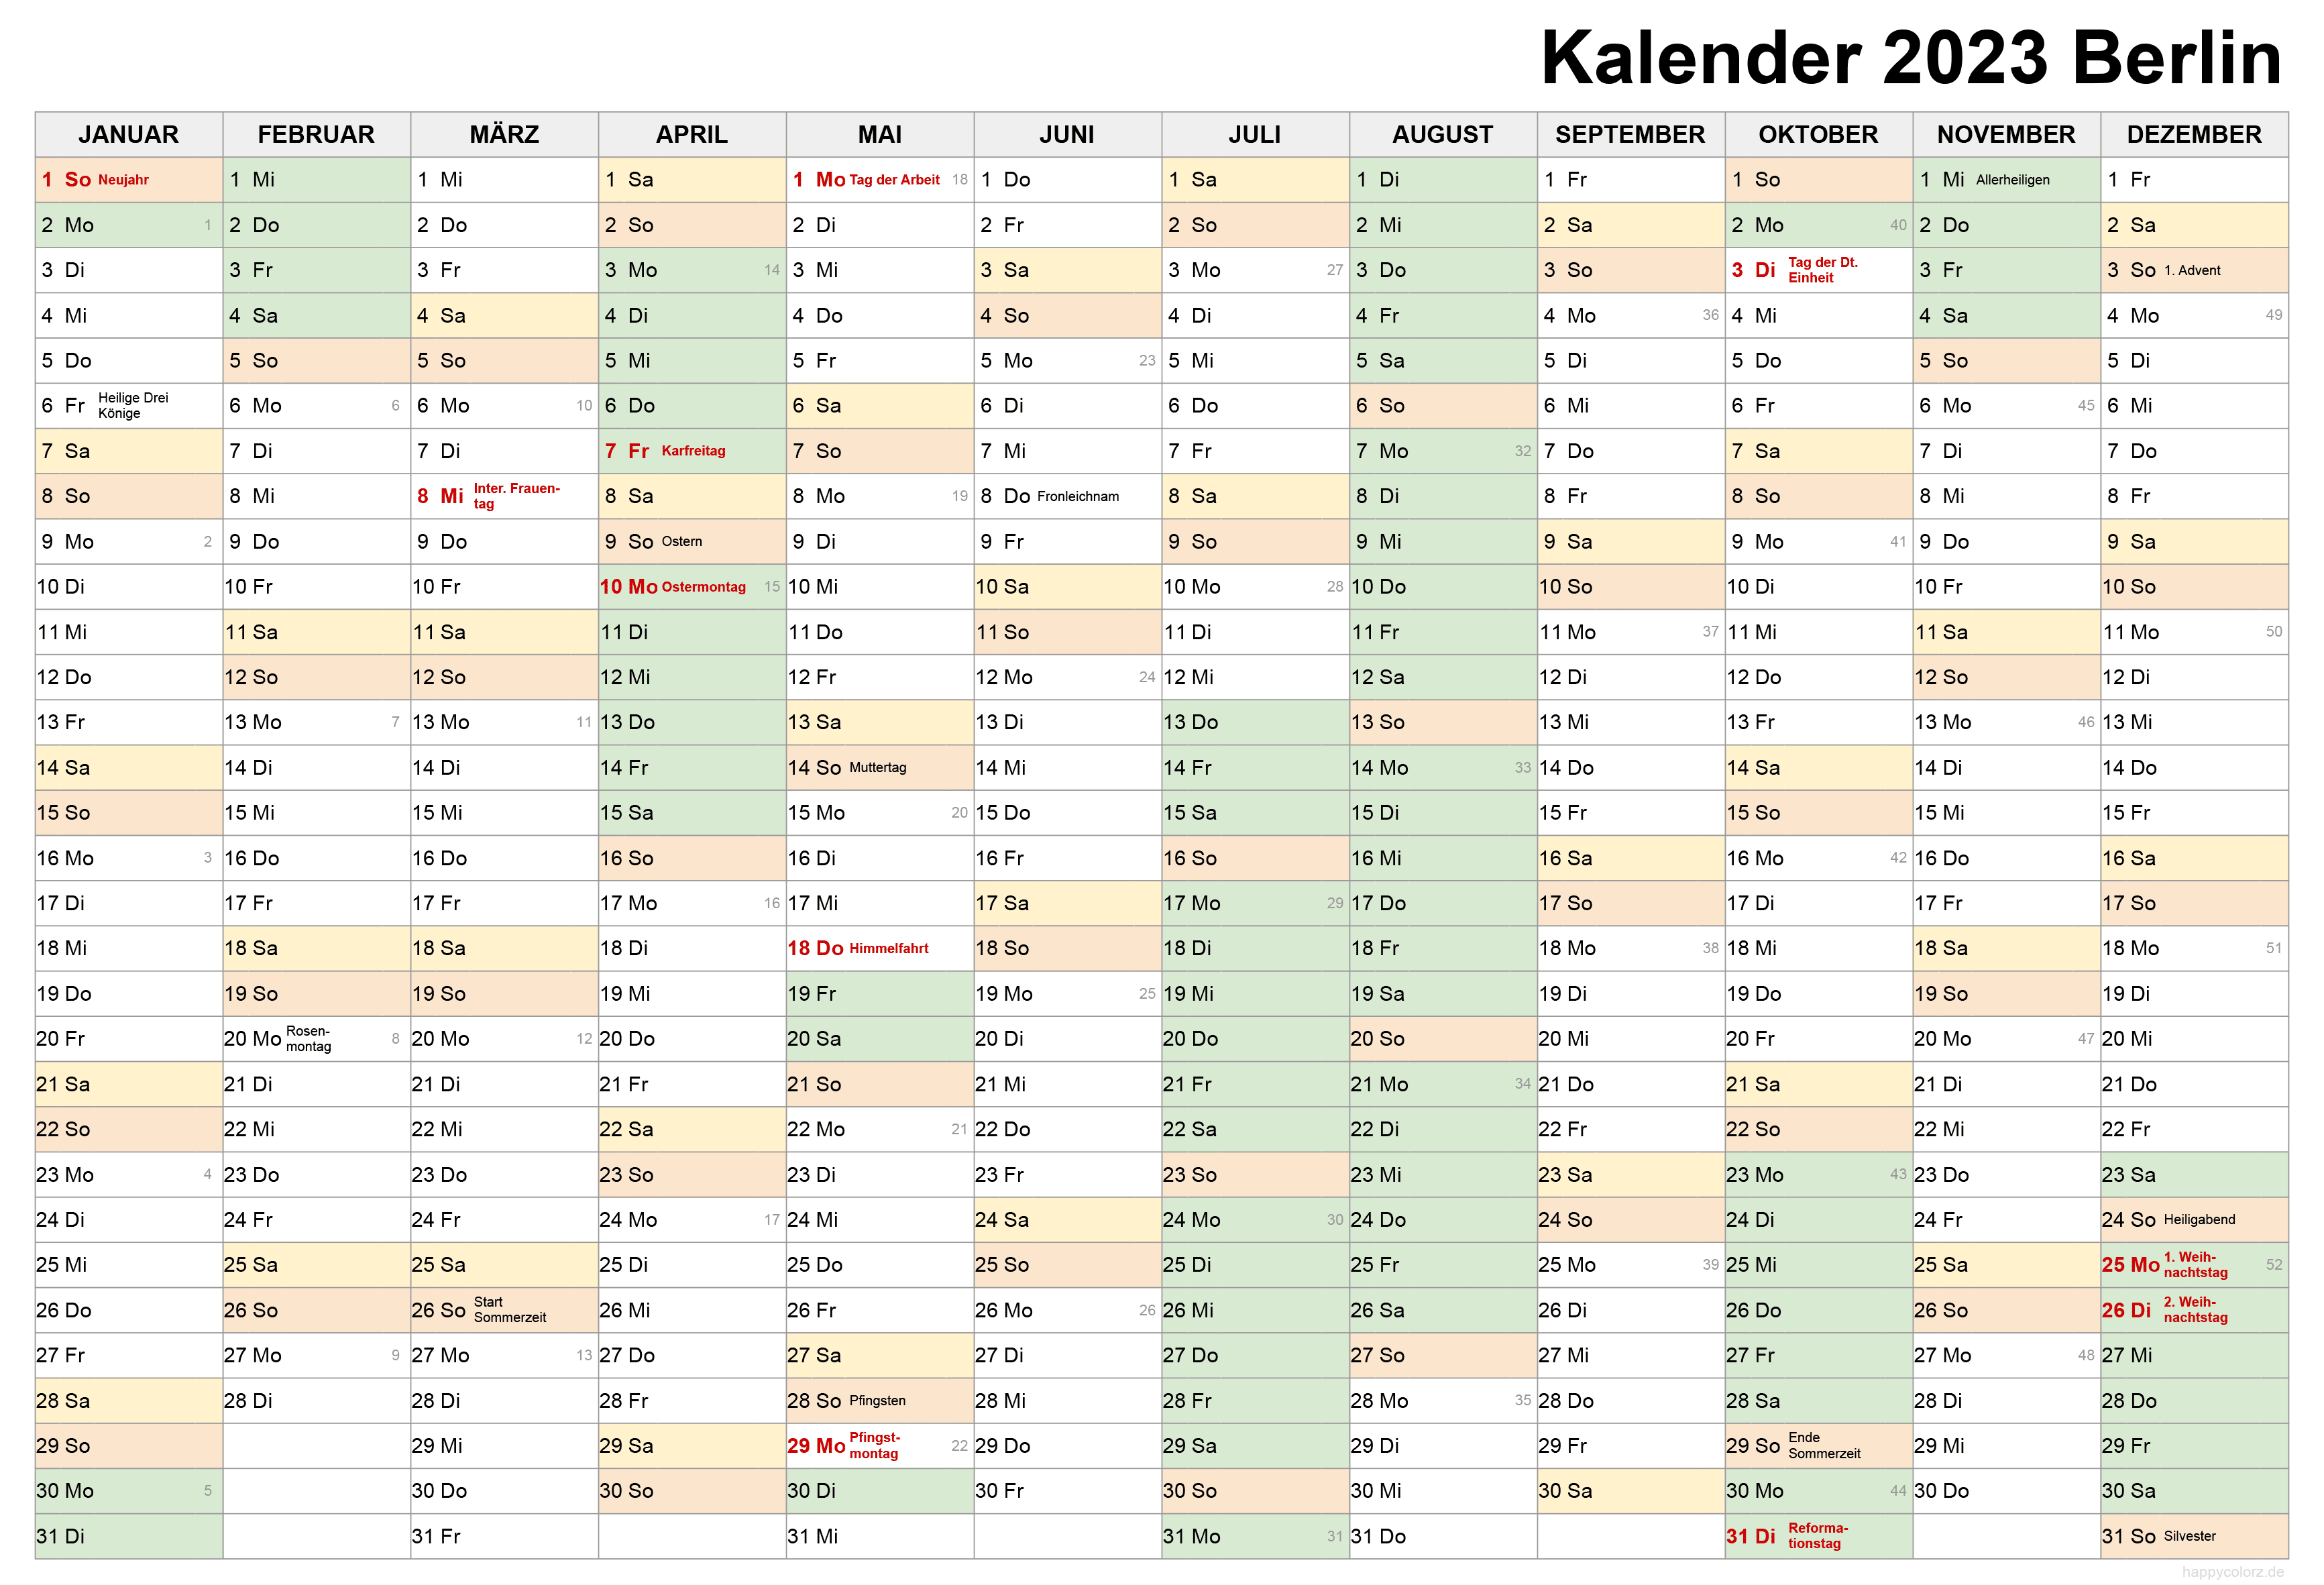 Kalender 2023 Berlin zum Ausdrucken